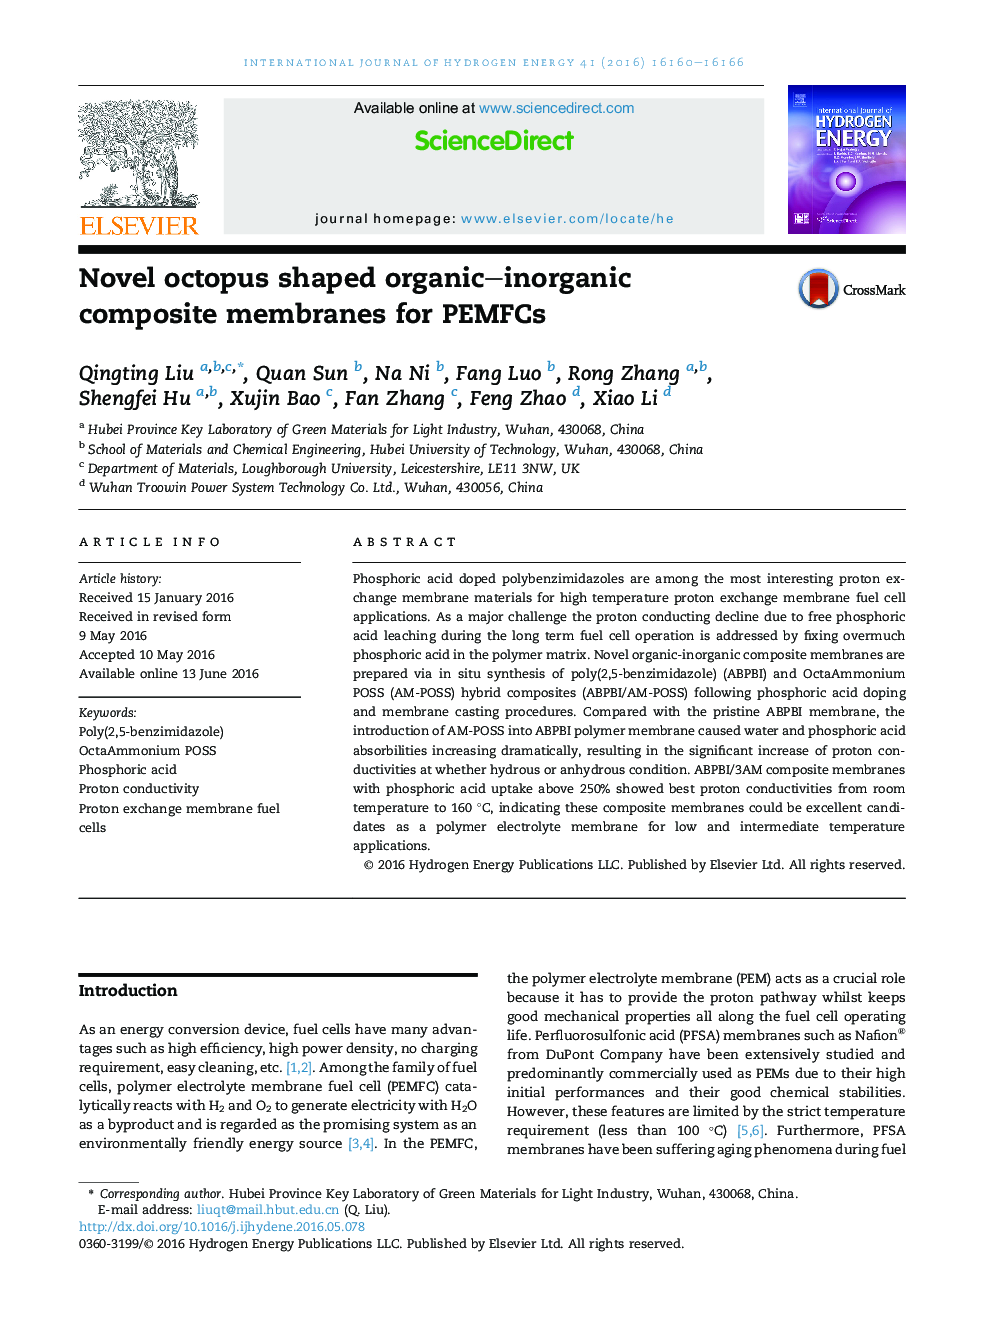 Novel octopus shaped organic-inorganic composite membranes for PEMFCs